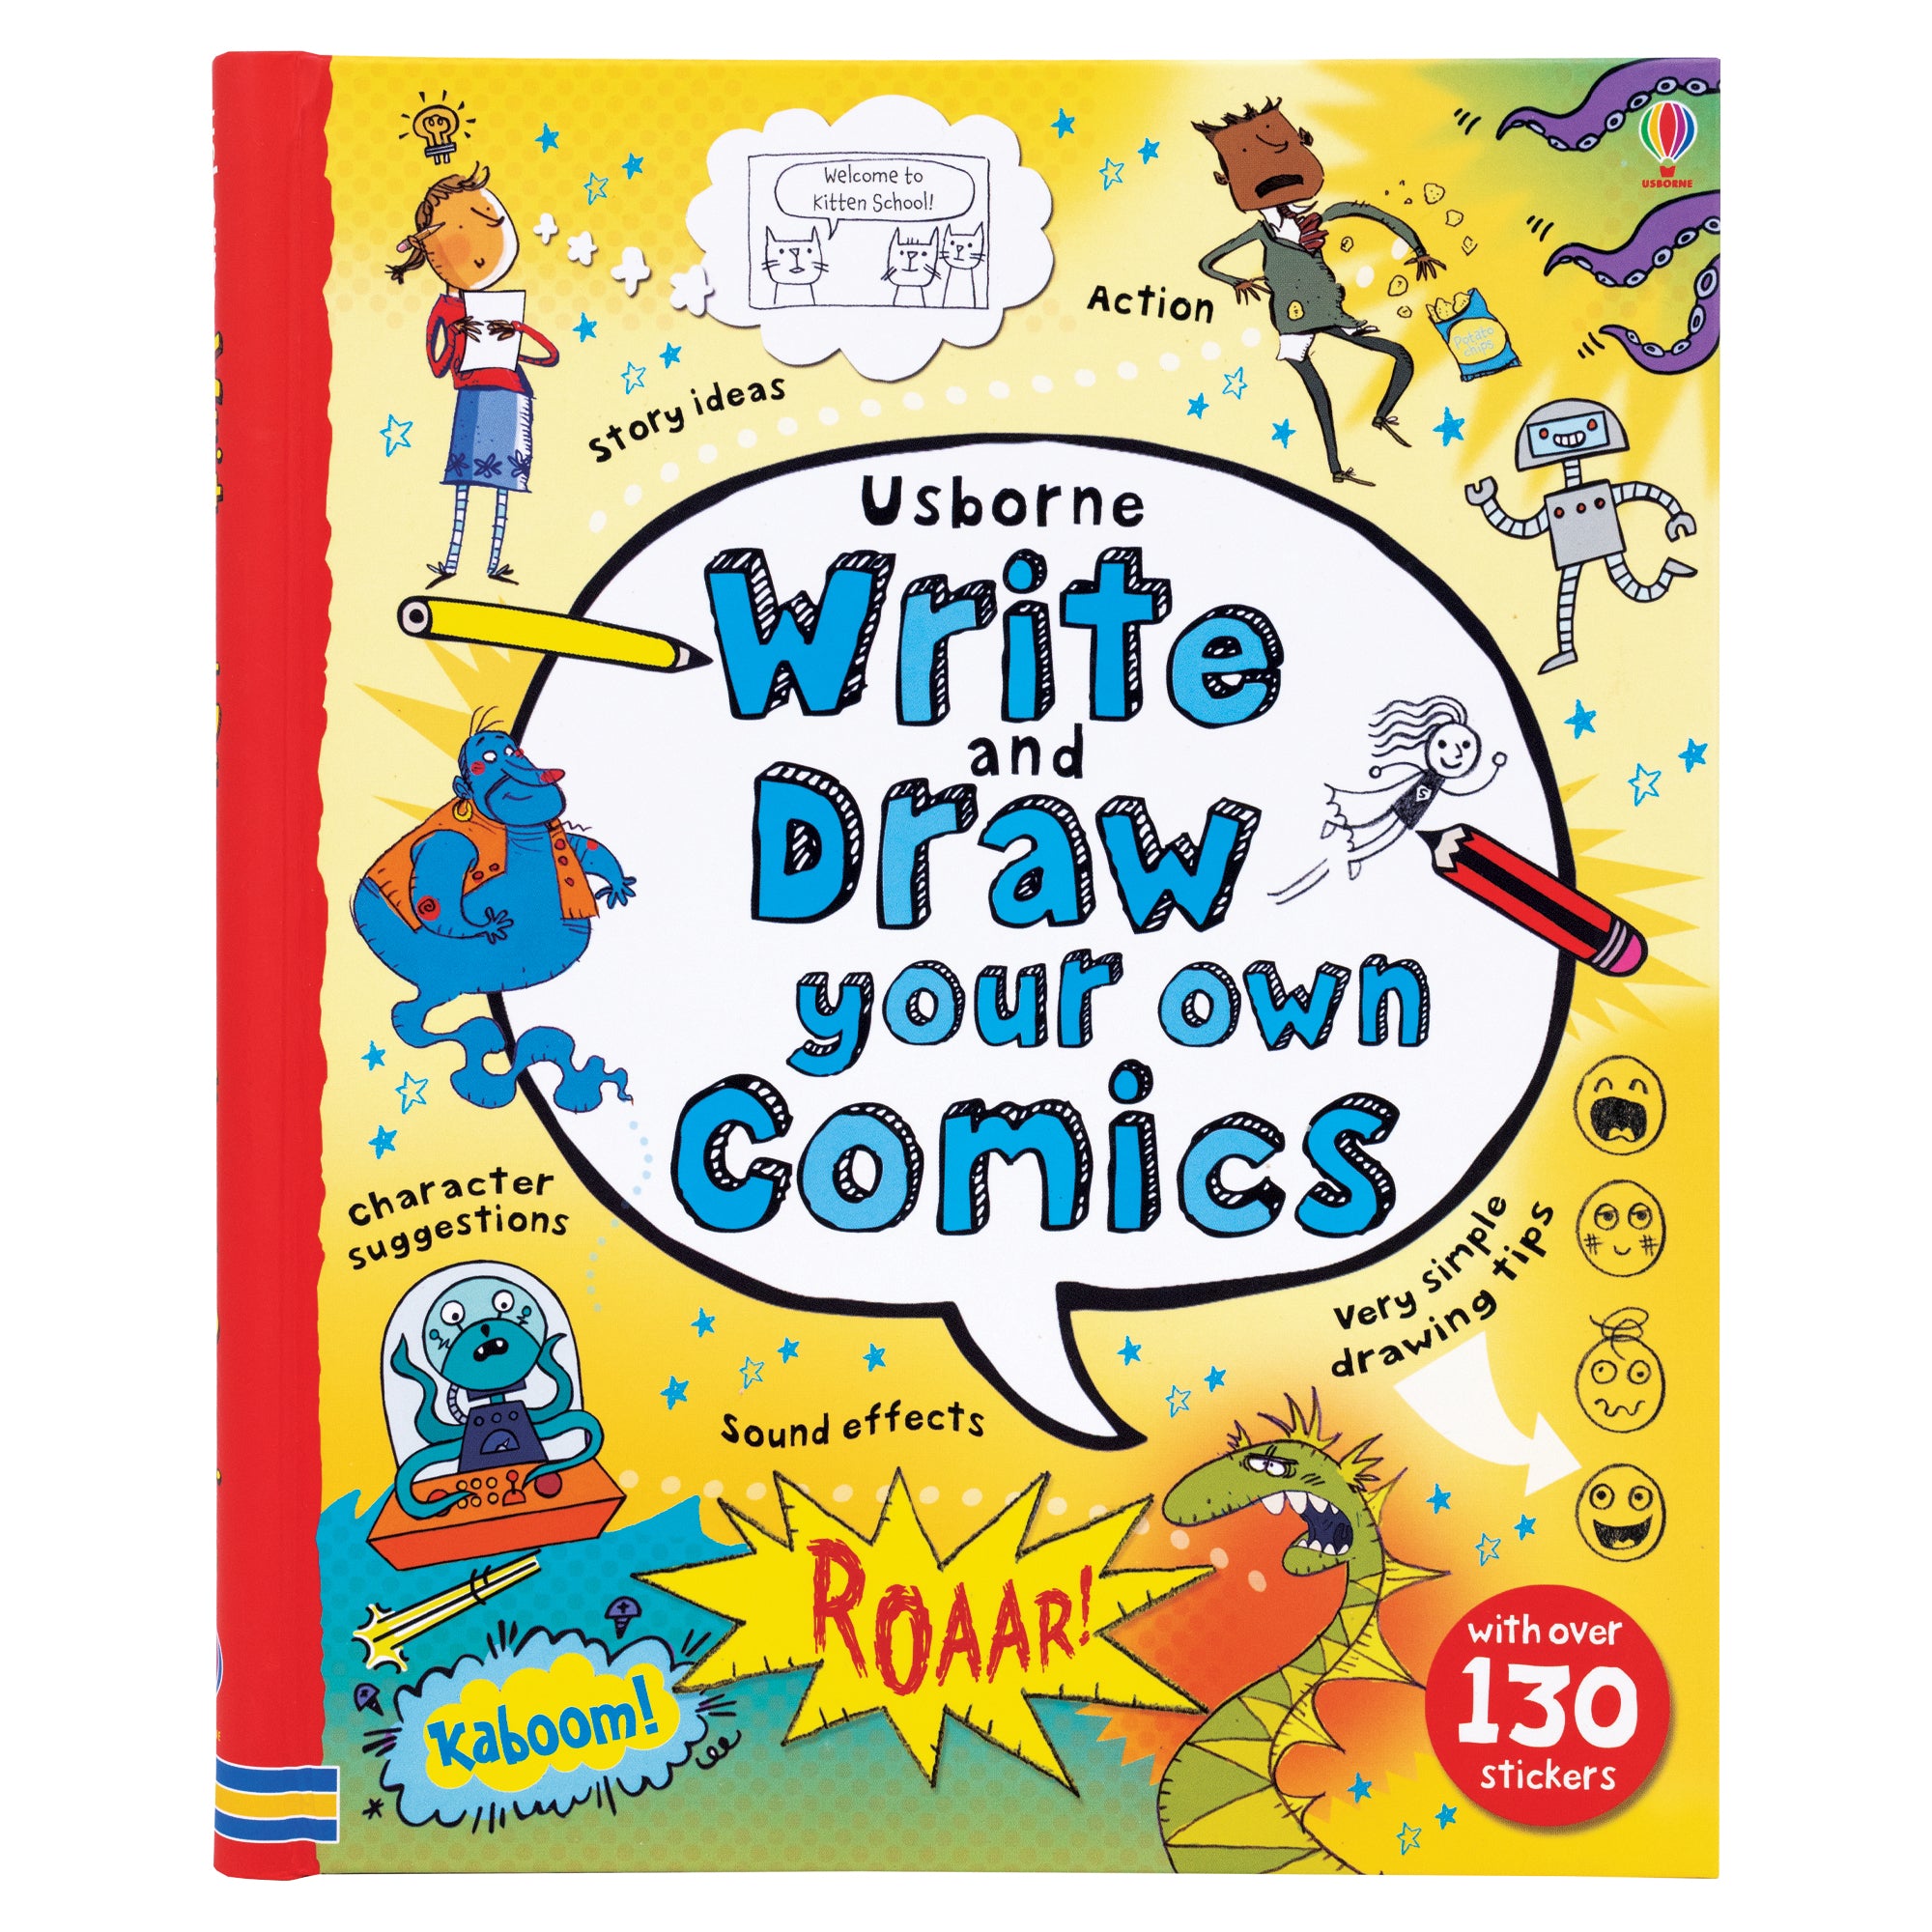 Why Write and Draw a Comic? - Making Comics (dotCom)